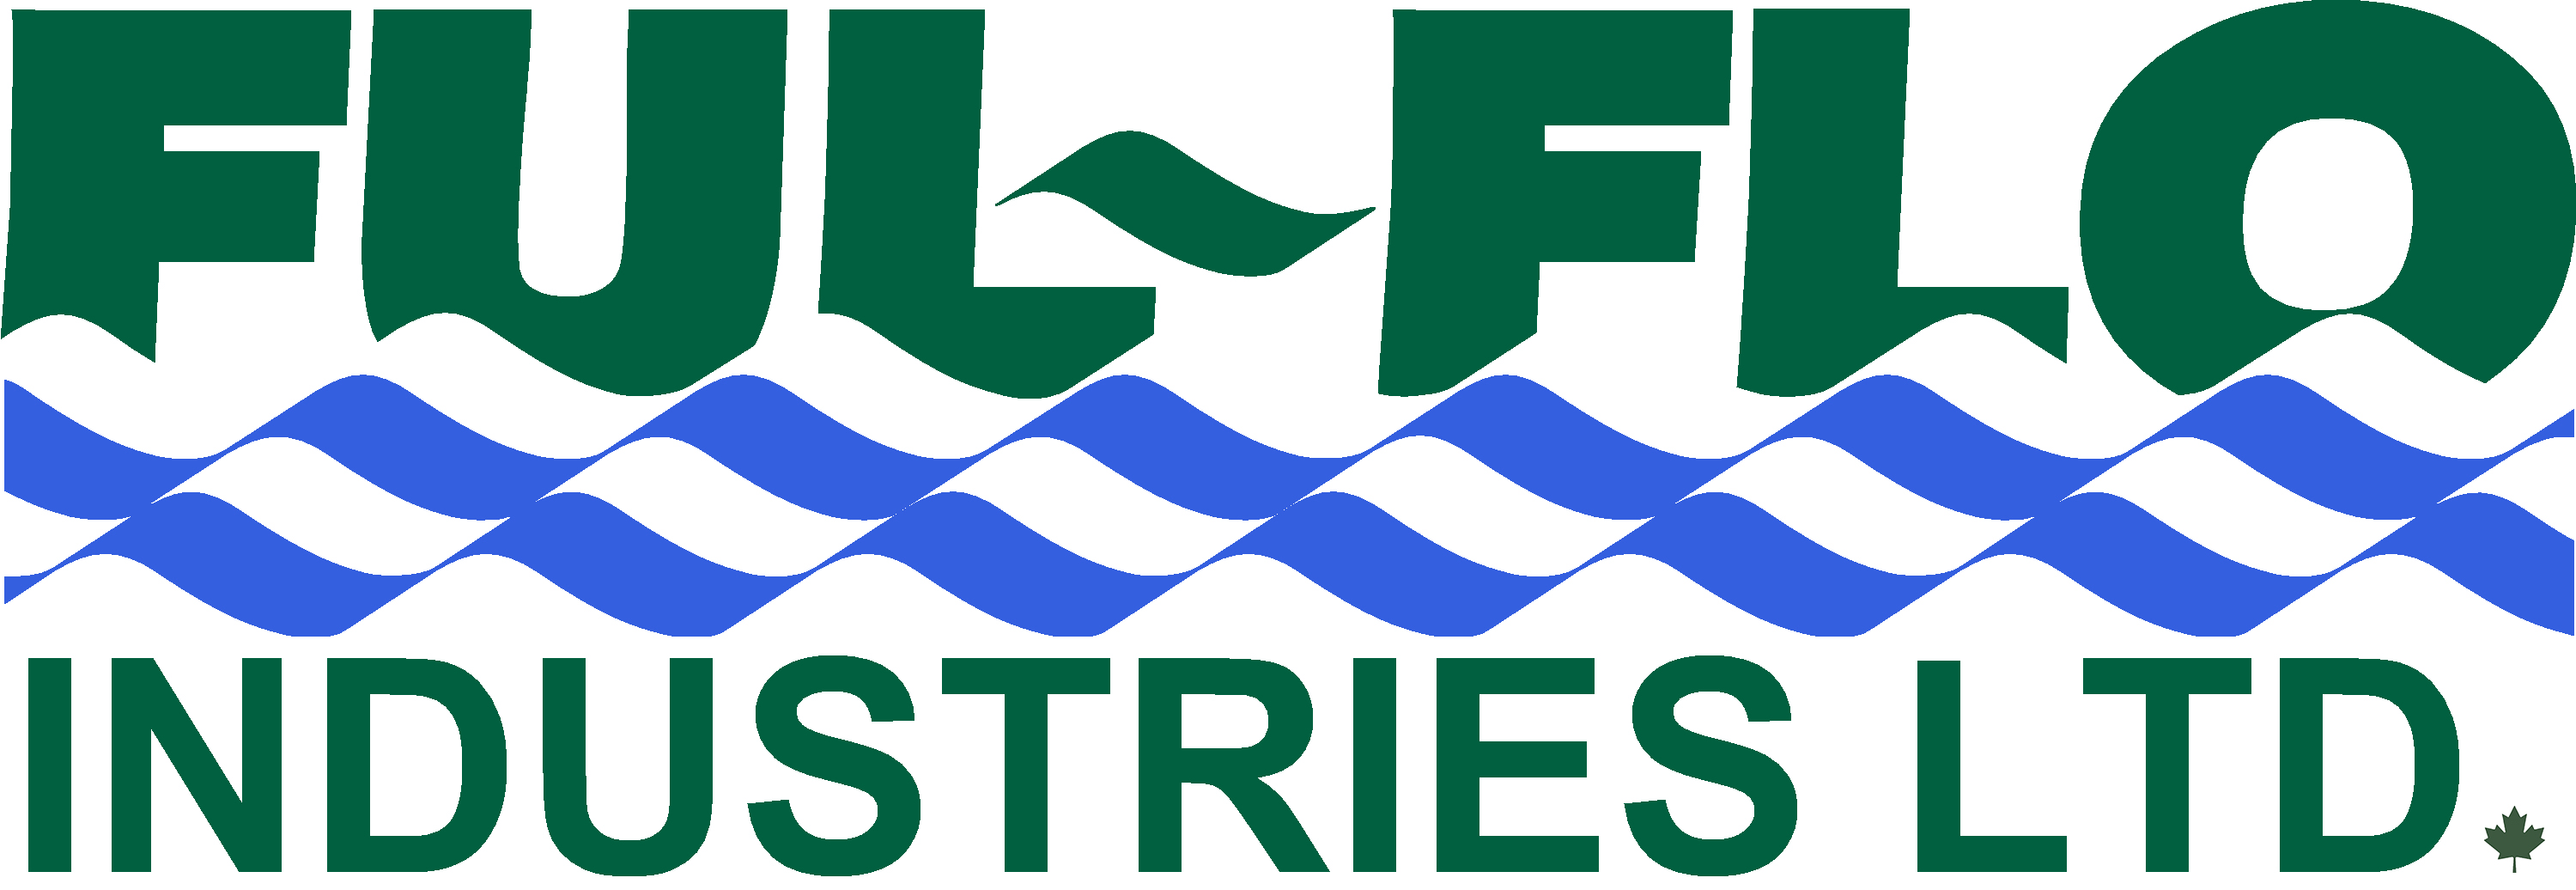 Ful-Flo Logo